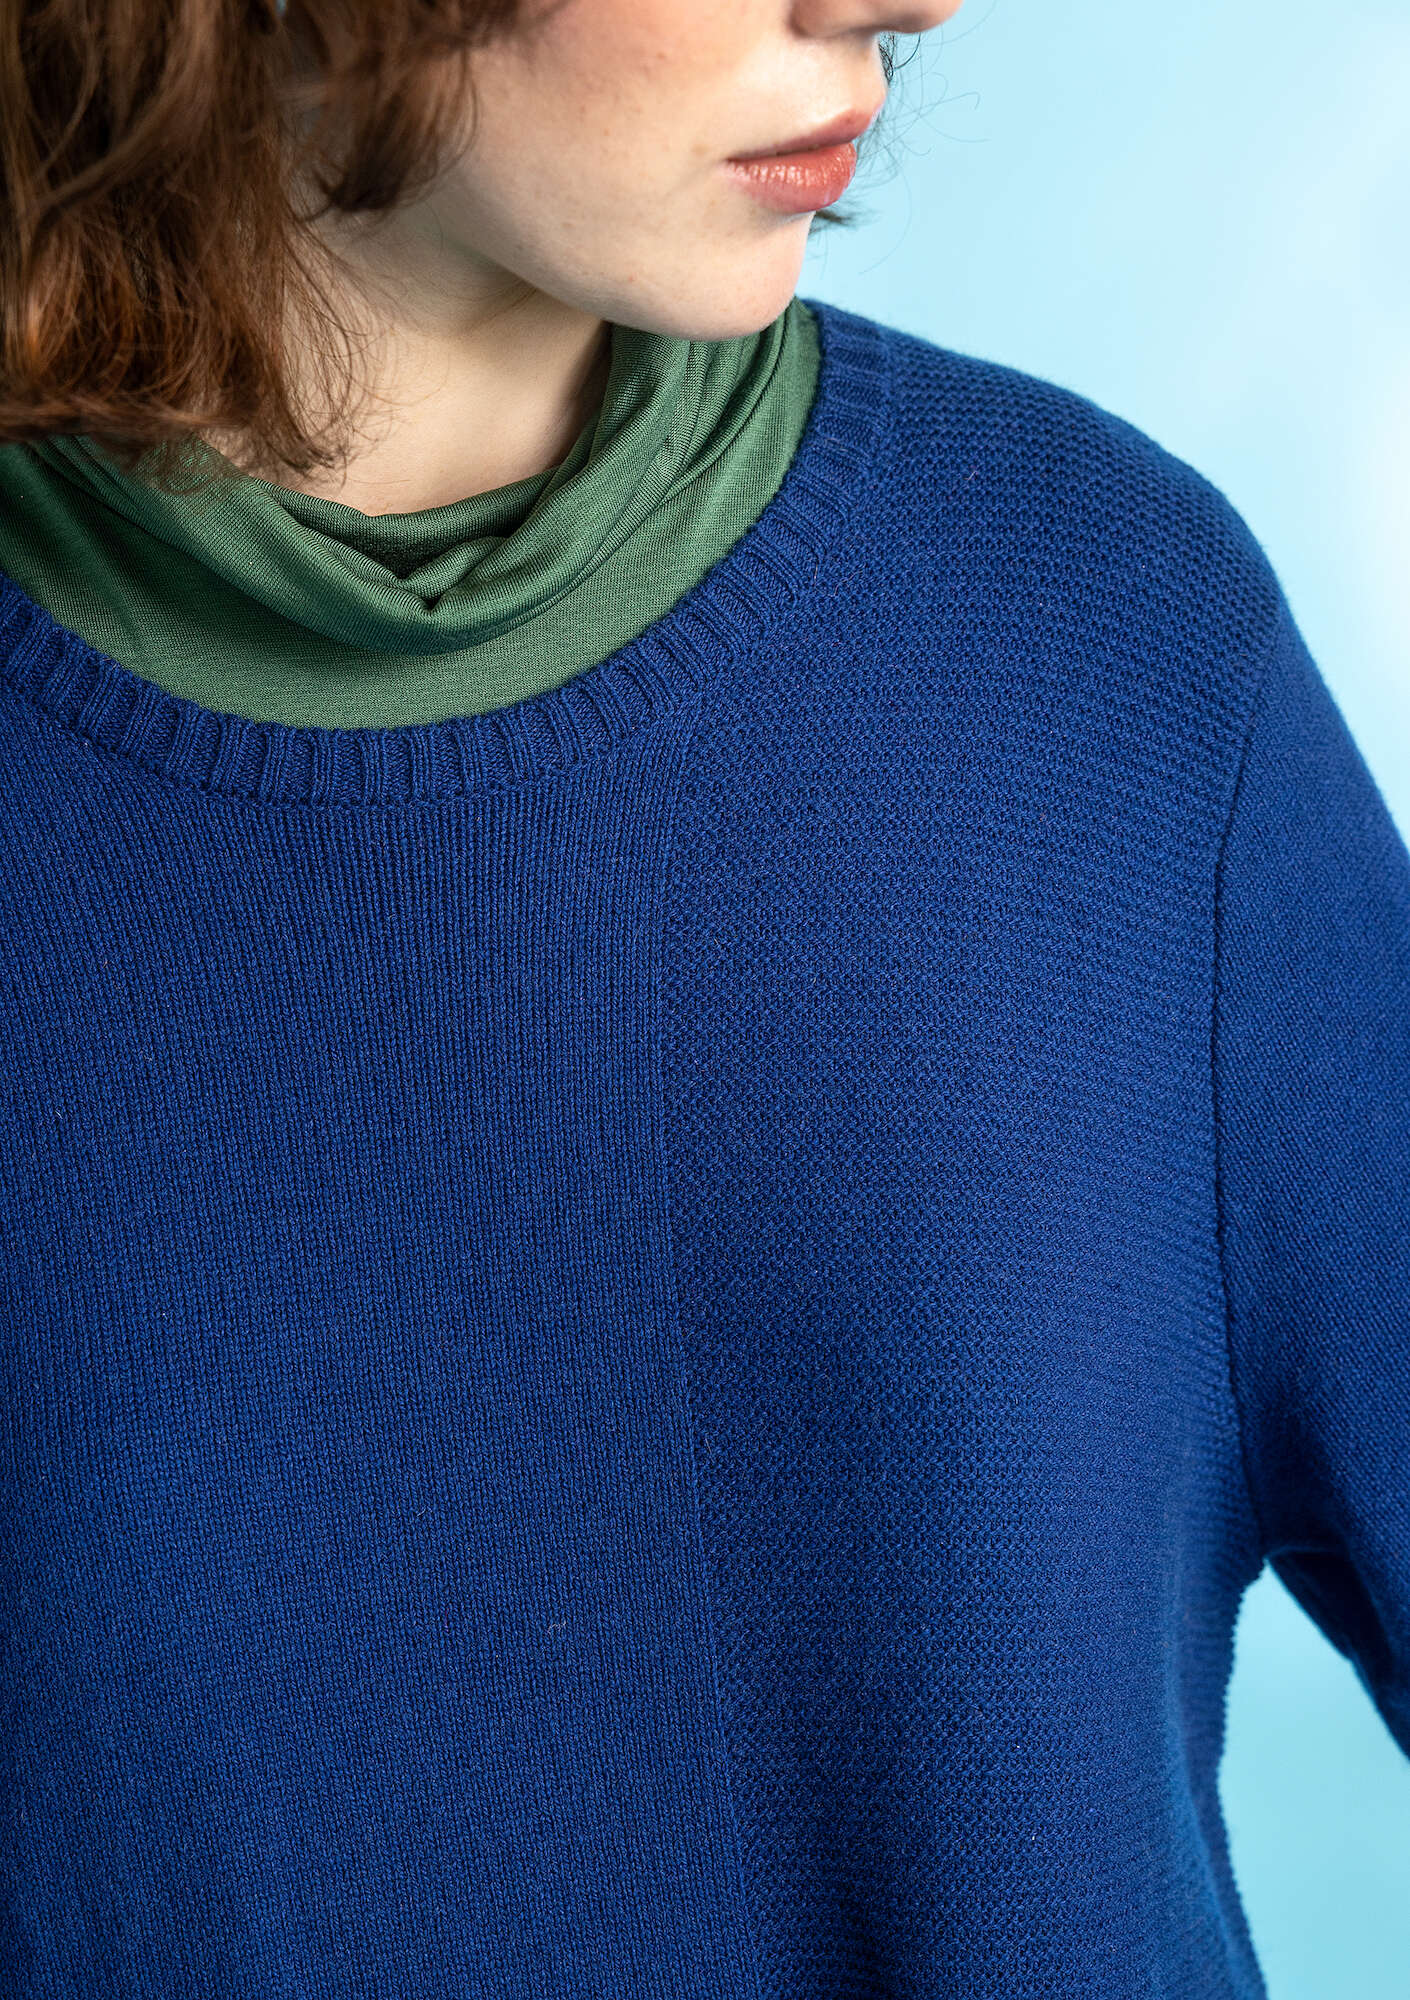 Knit tunic in wool/cotton indigo blue